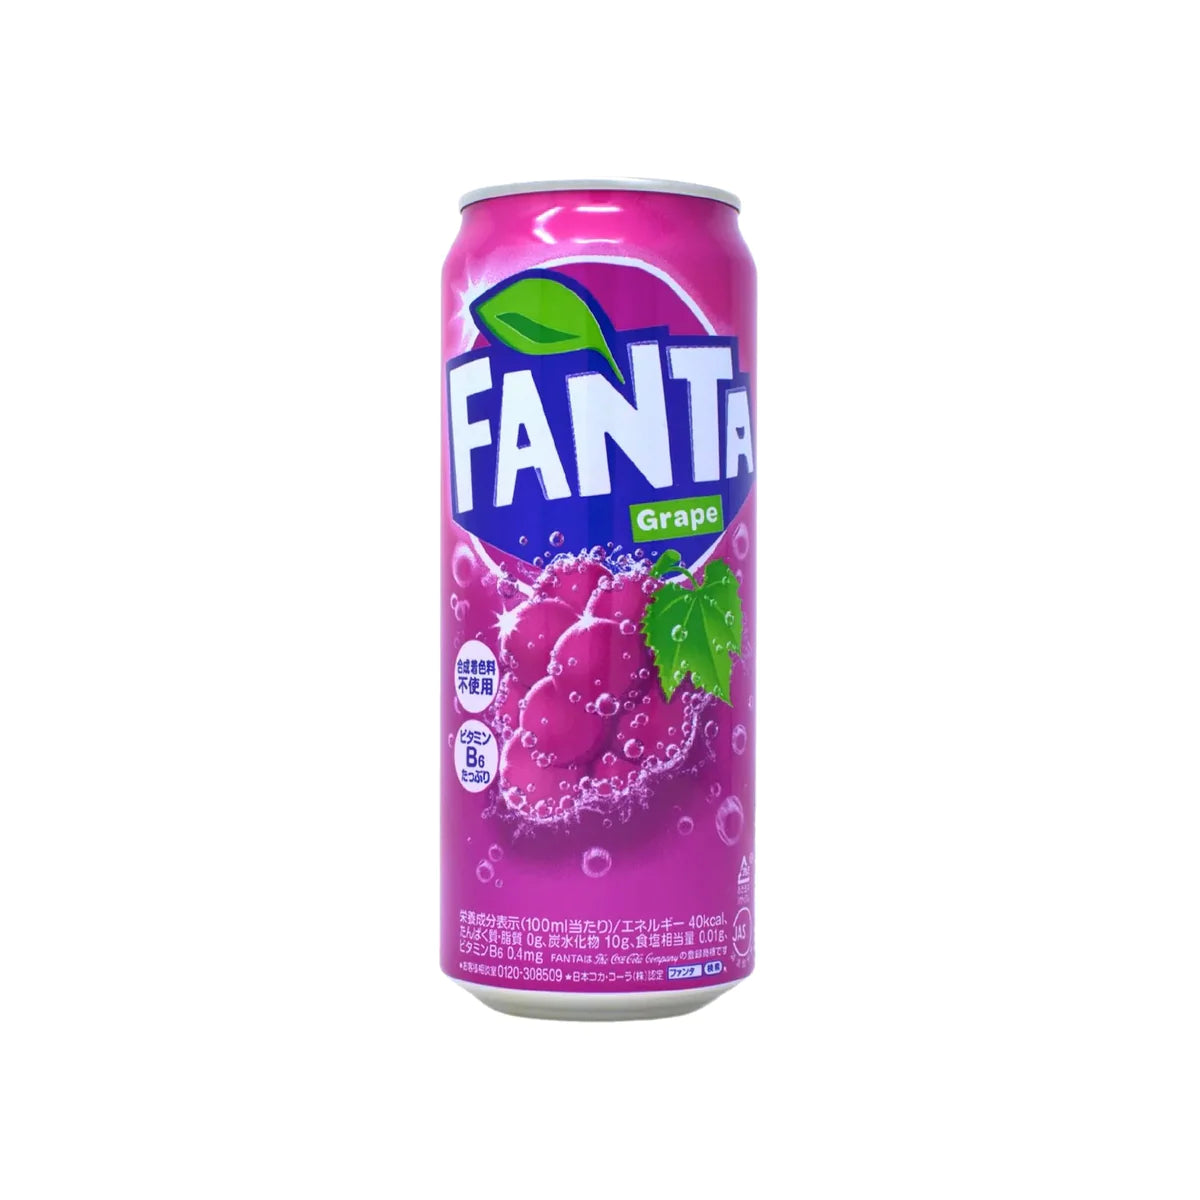 Fanta - Limited Edition Grape Flavour 500ml (Japan)